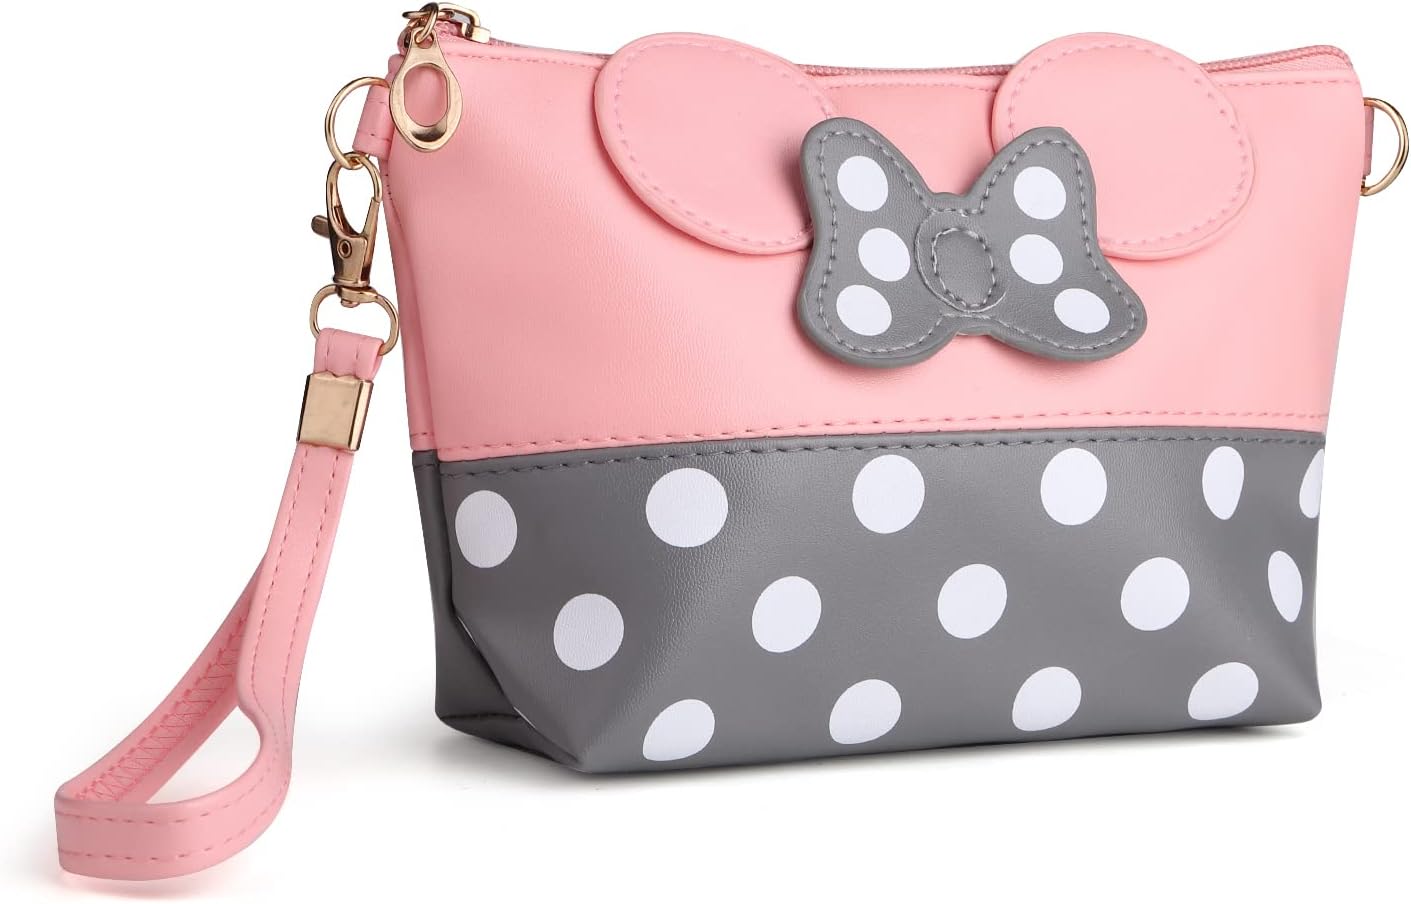 Cartoon Leather Travel Makeup Handbag, Cute Portable Cosmetic Bag Toiletry Pouch for Women Teen Girls Kids(Pink)